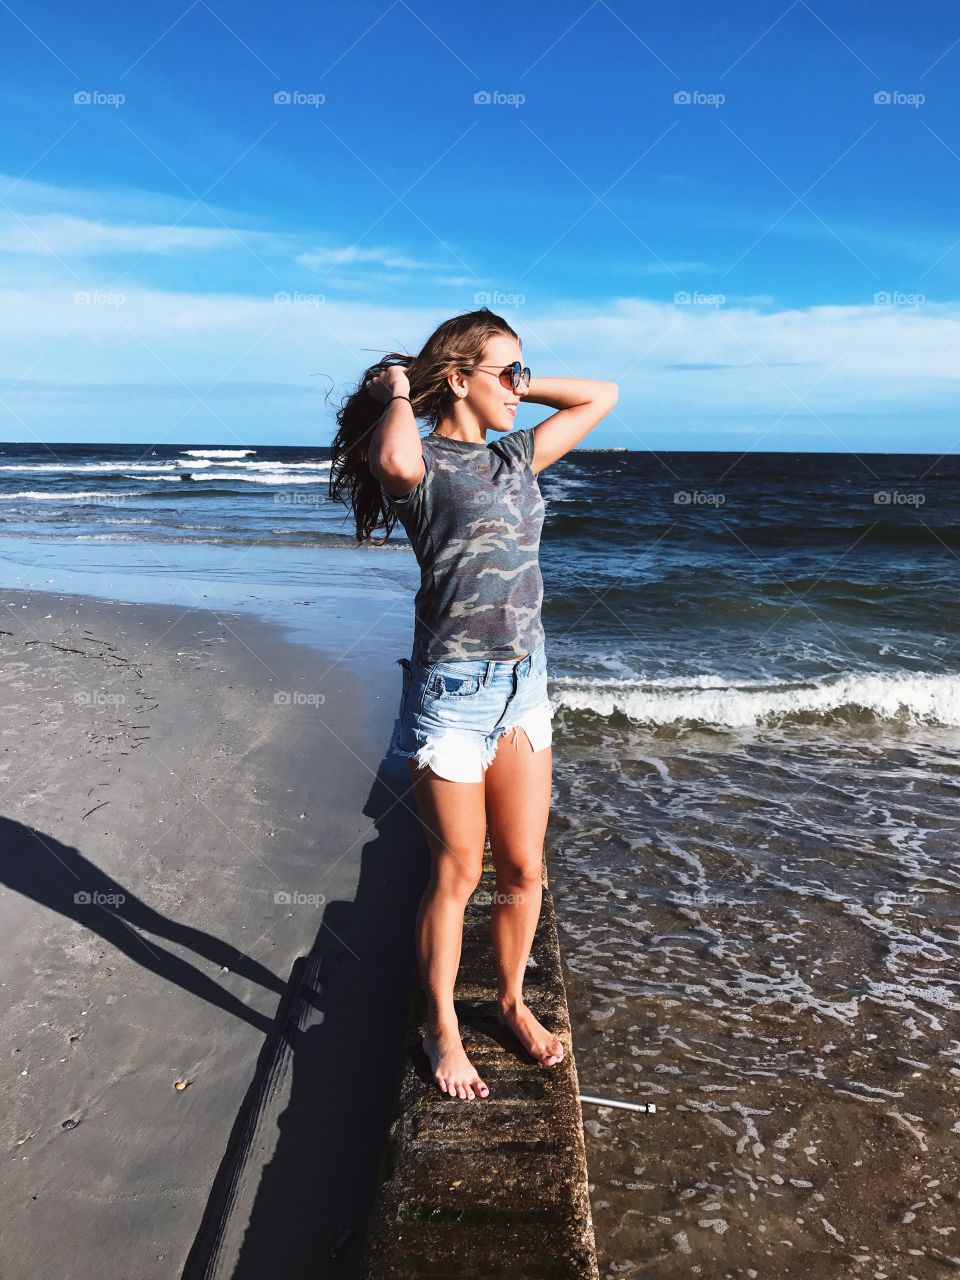 girl at beach 